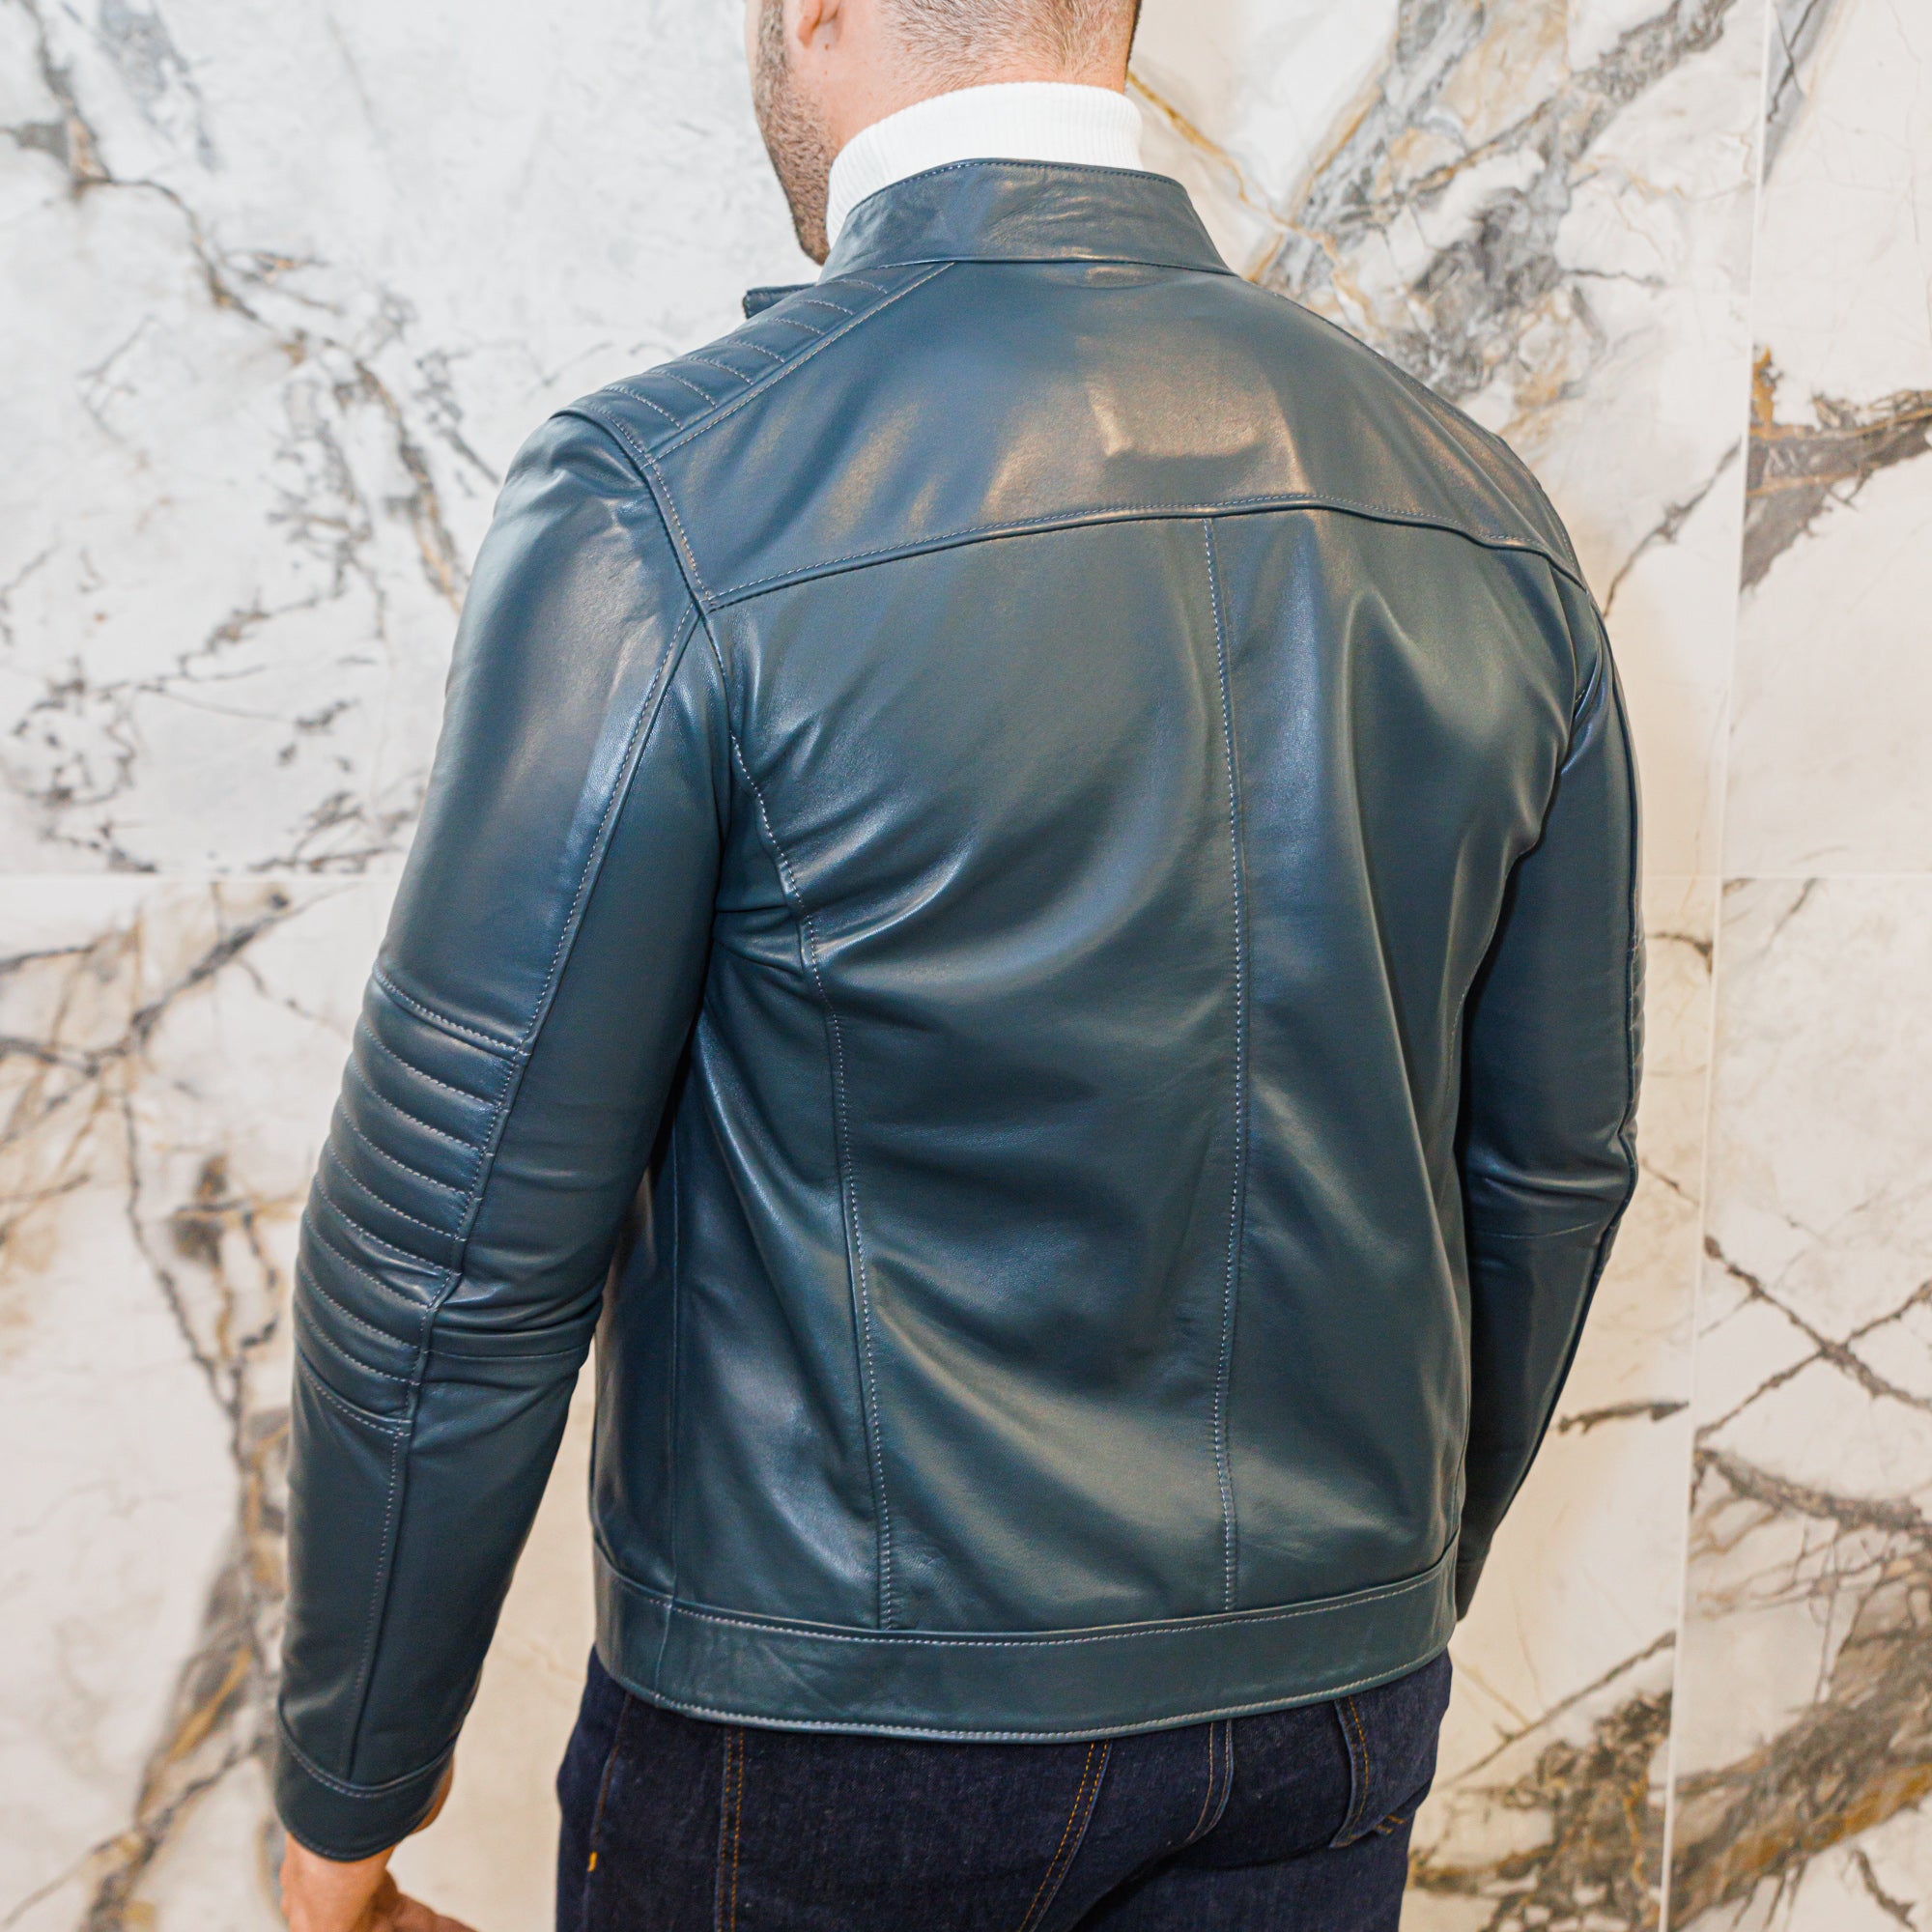 Lambskin Leather Jacket - Teal Blue - Leather Jacket by Urbbana